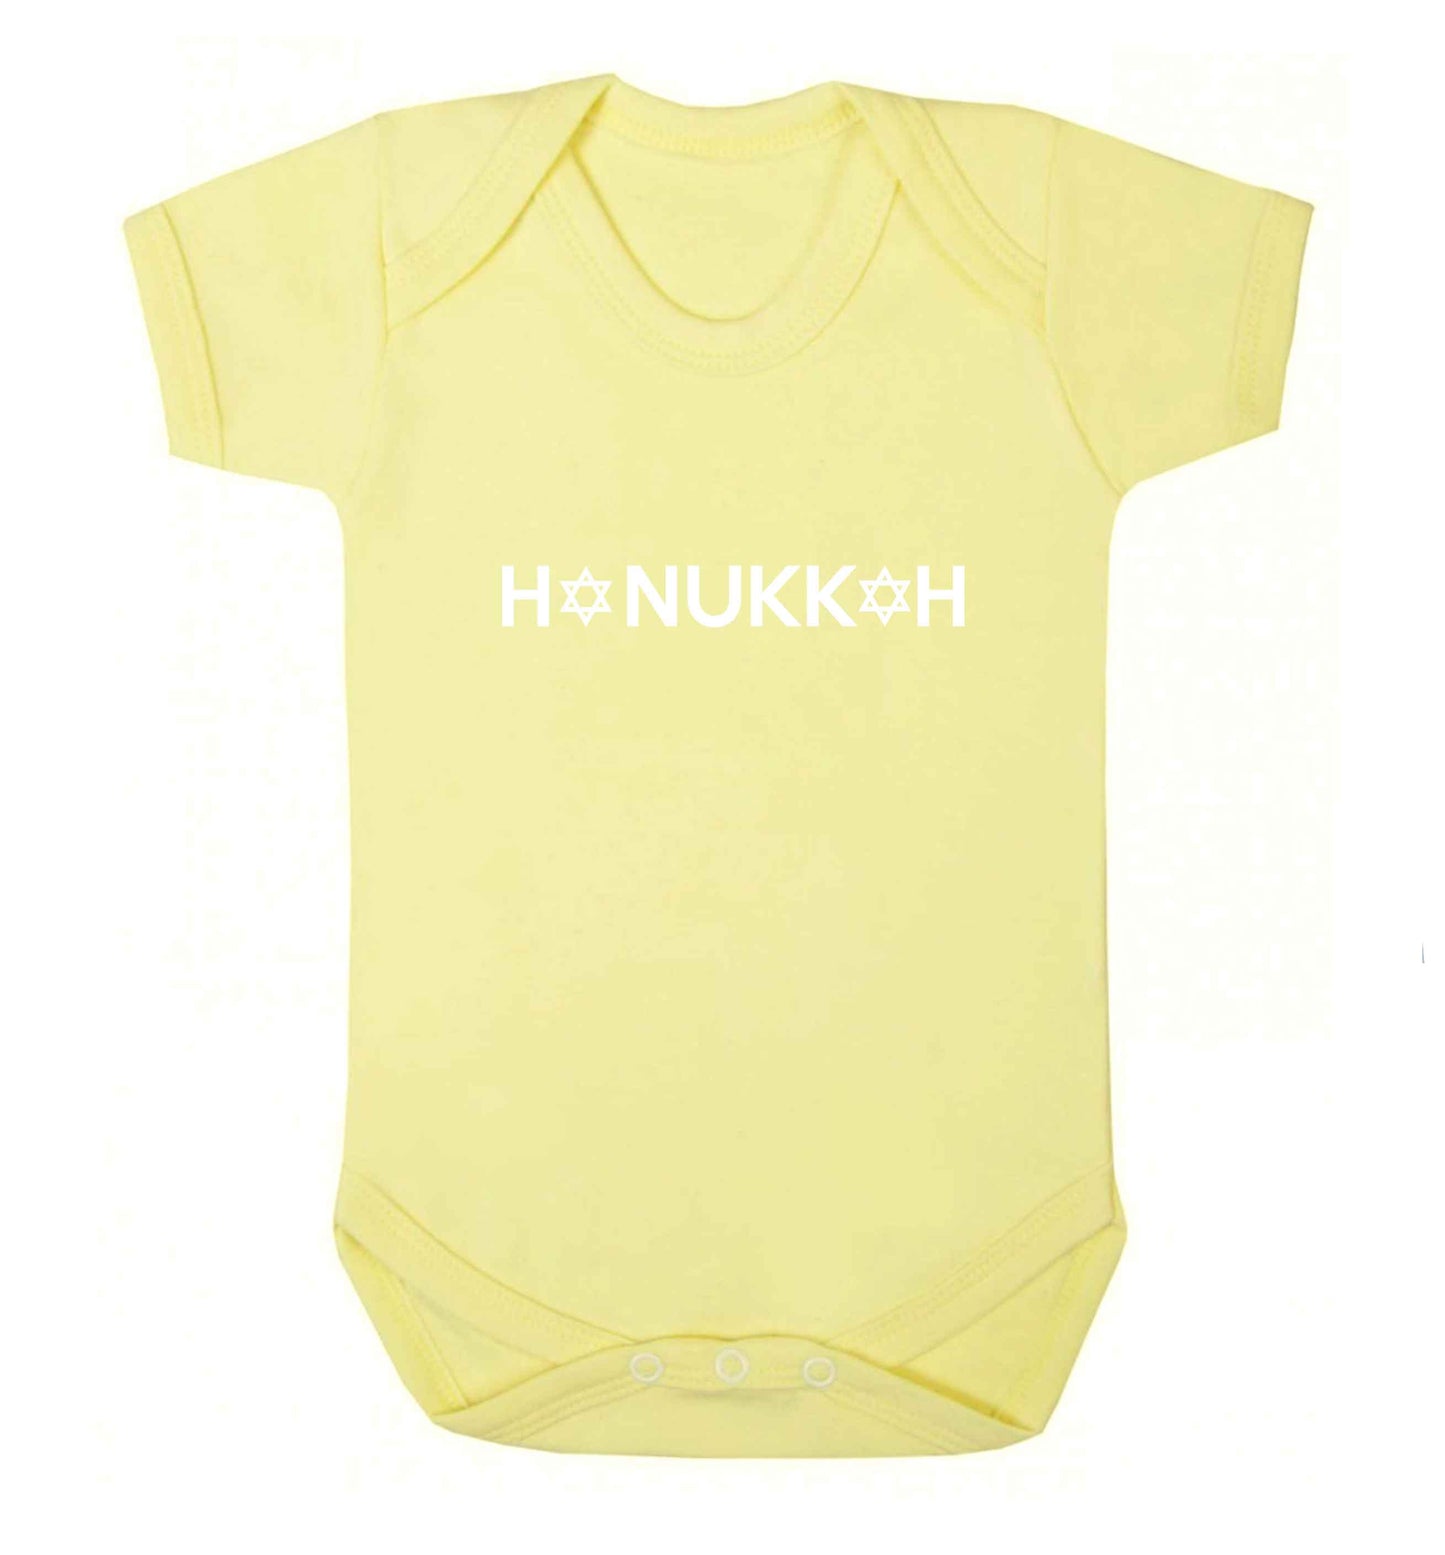 Hanukkah star of david baby vest pale yellow 18-24 months